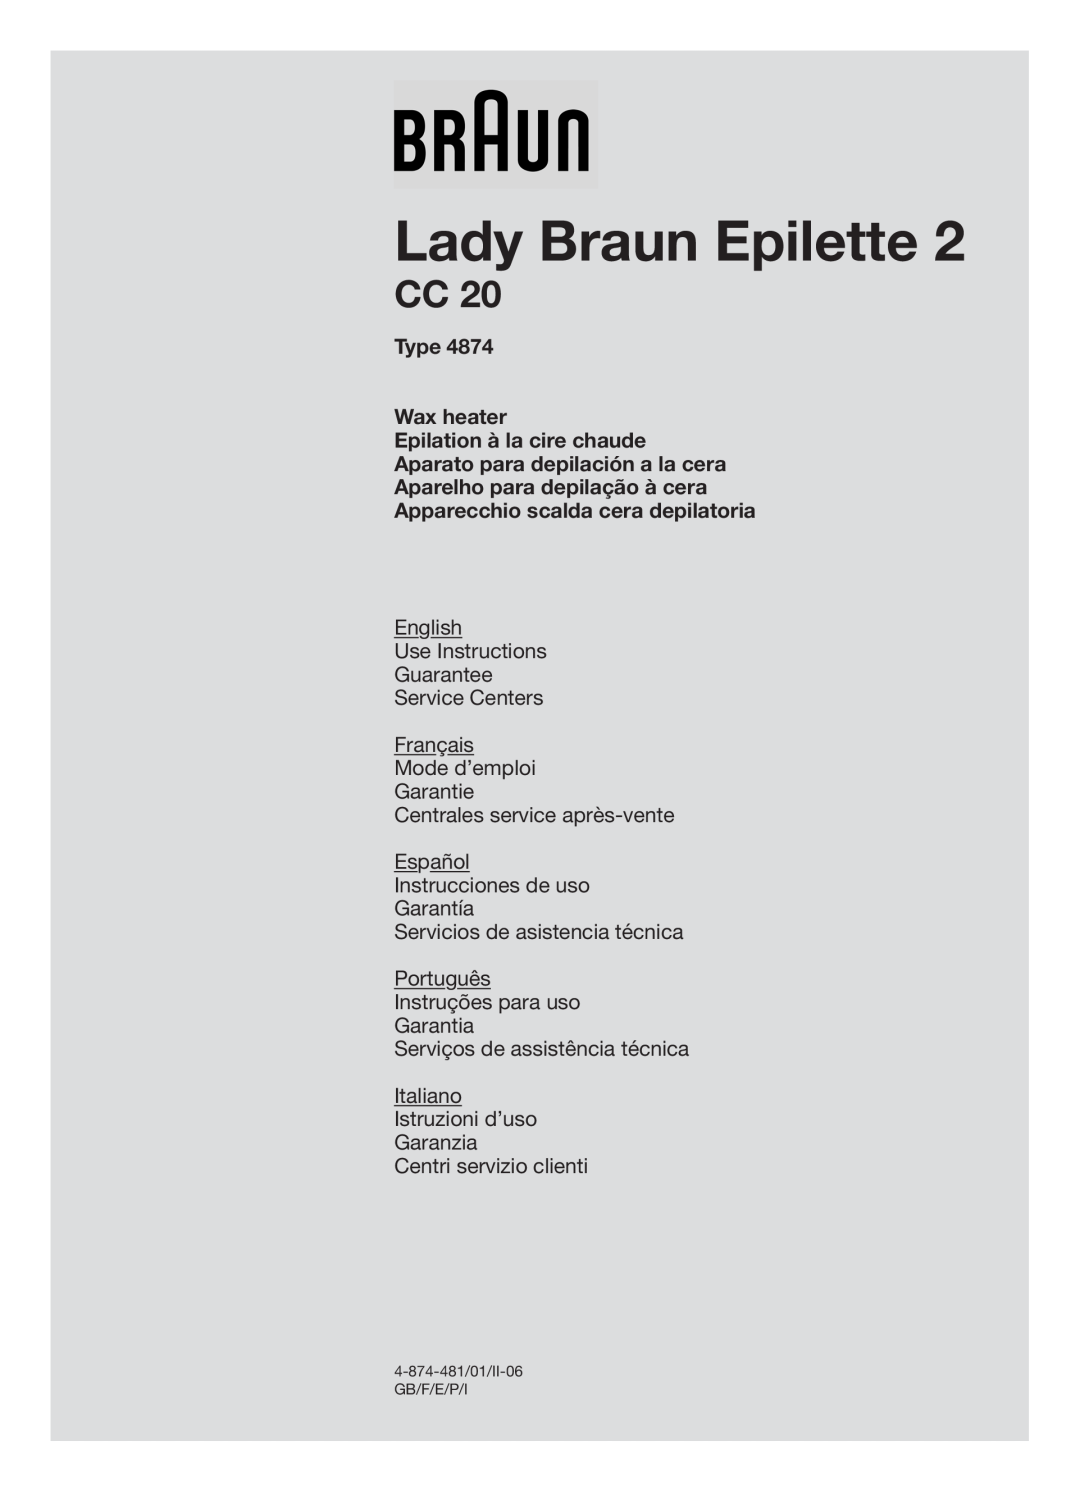 Braun CC20 manual Lady Braun Epilette, Type Wax heater Epilation à la cire chaude, Apparecchio scalda cera depilatoria 